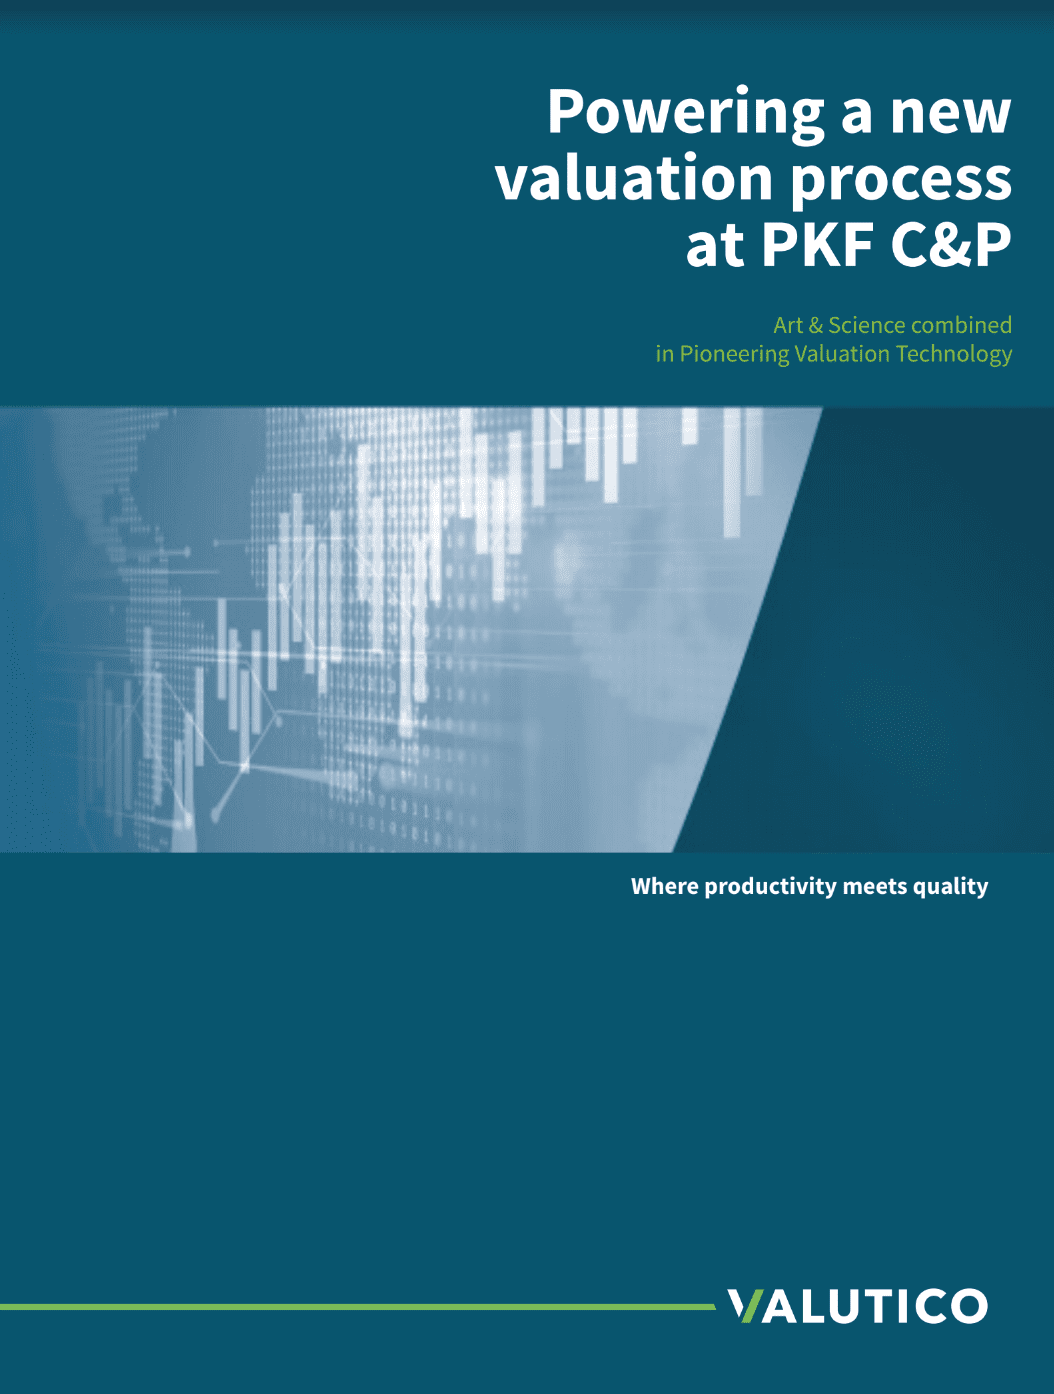 Estudio de caso de PKF C&P